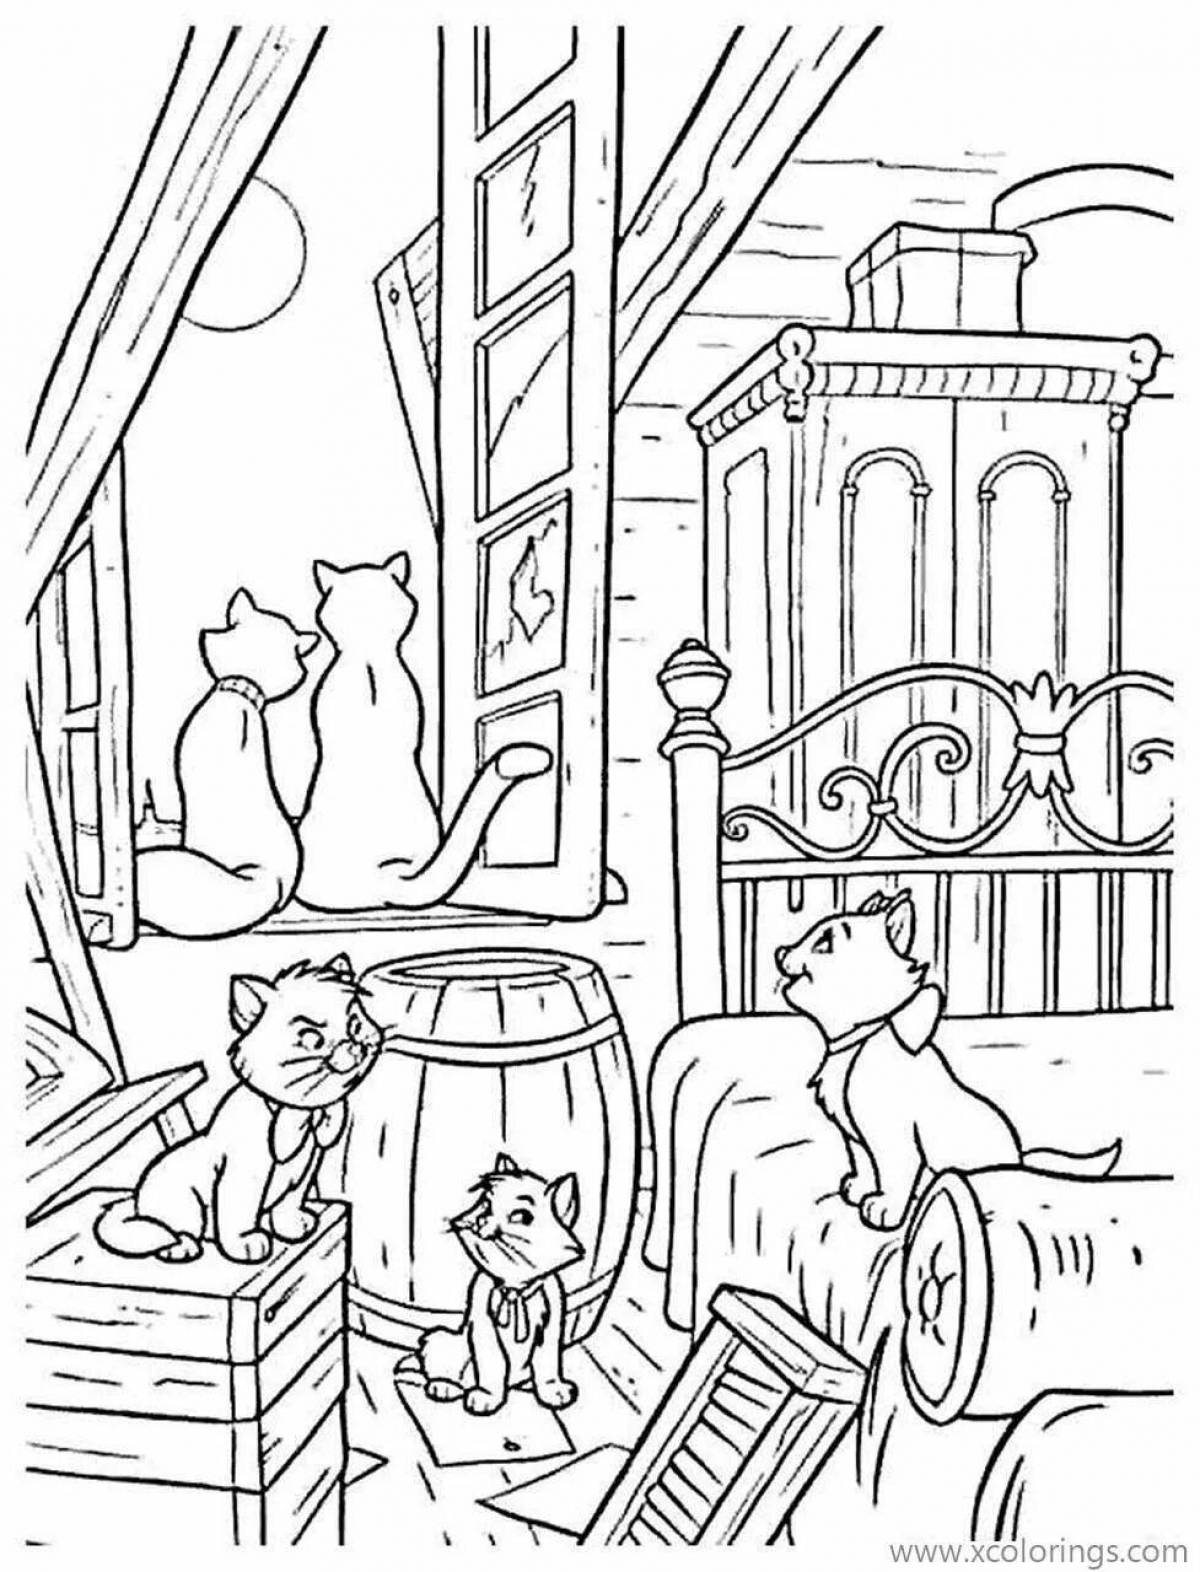 Kitten maintenance coloring page